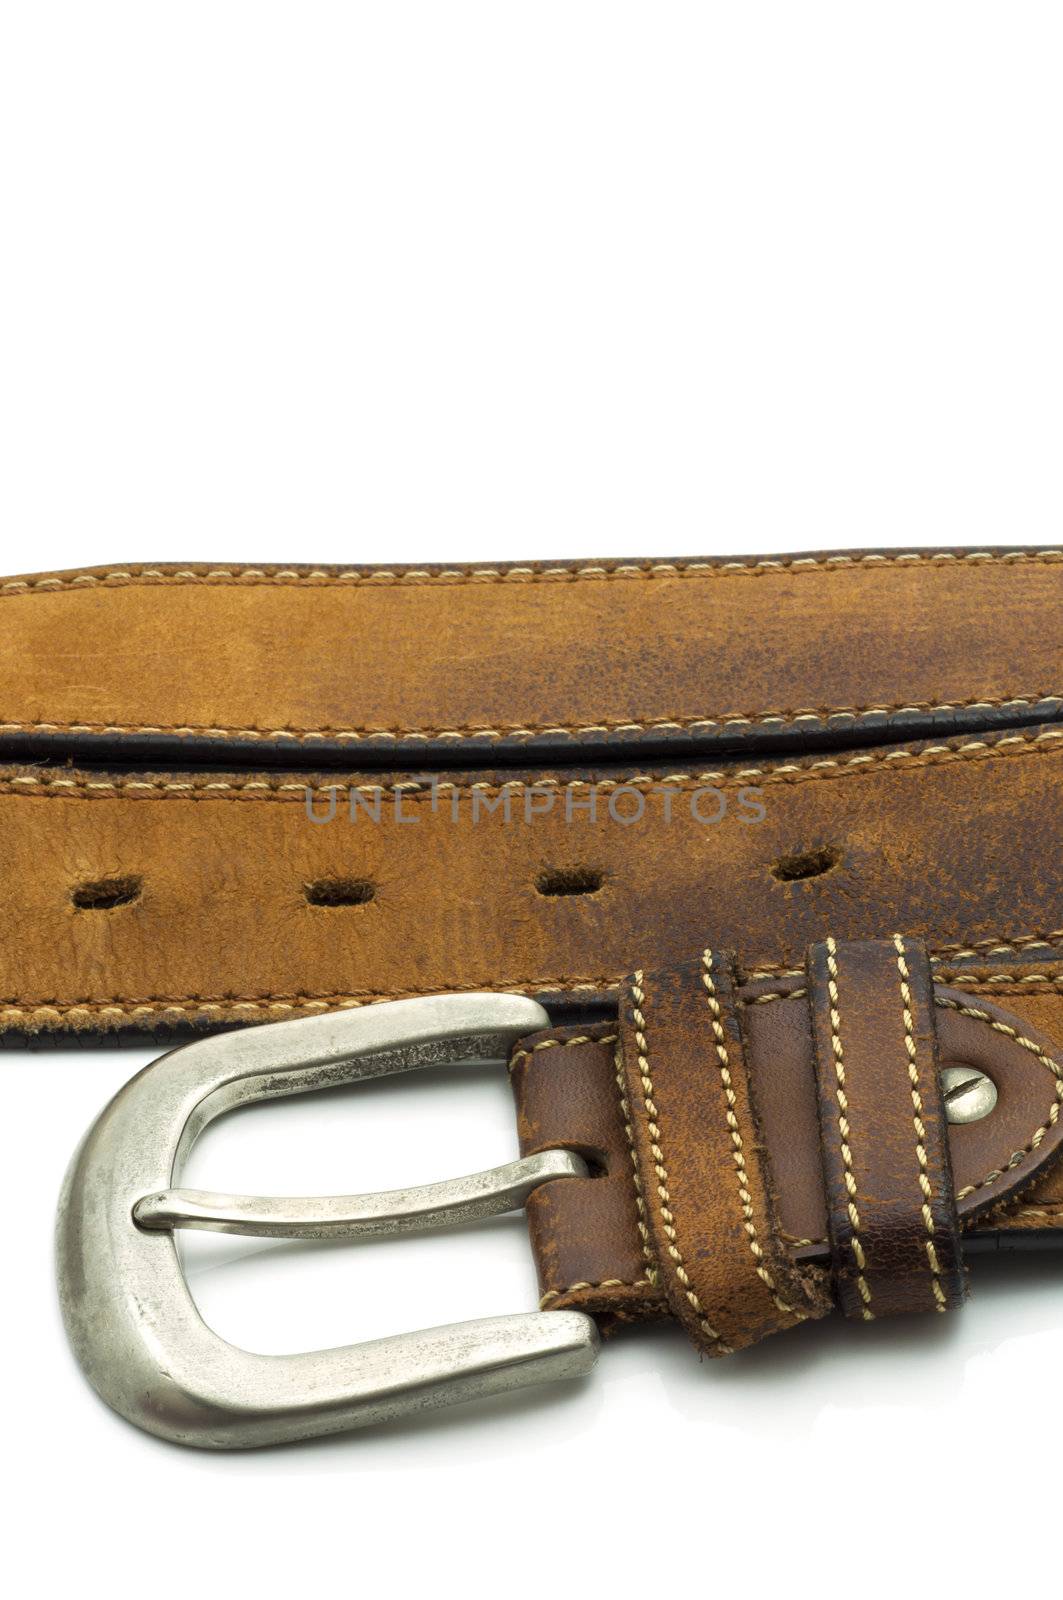 Leather Belt by TanawatPontchour